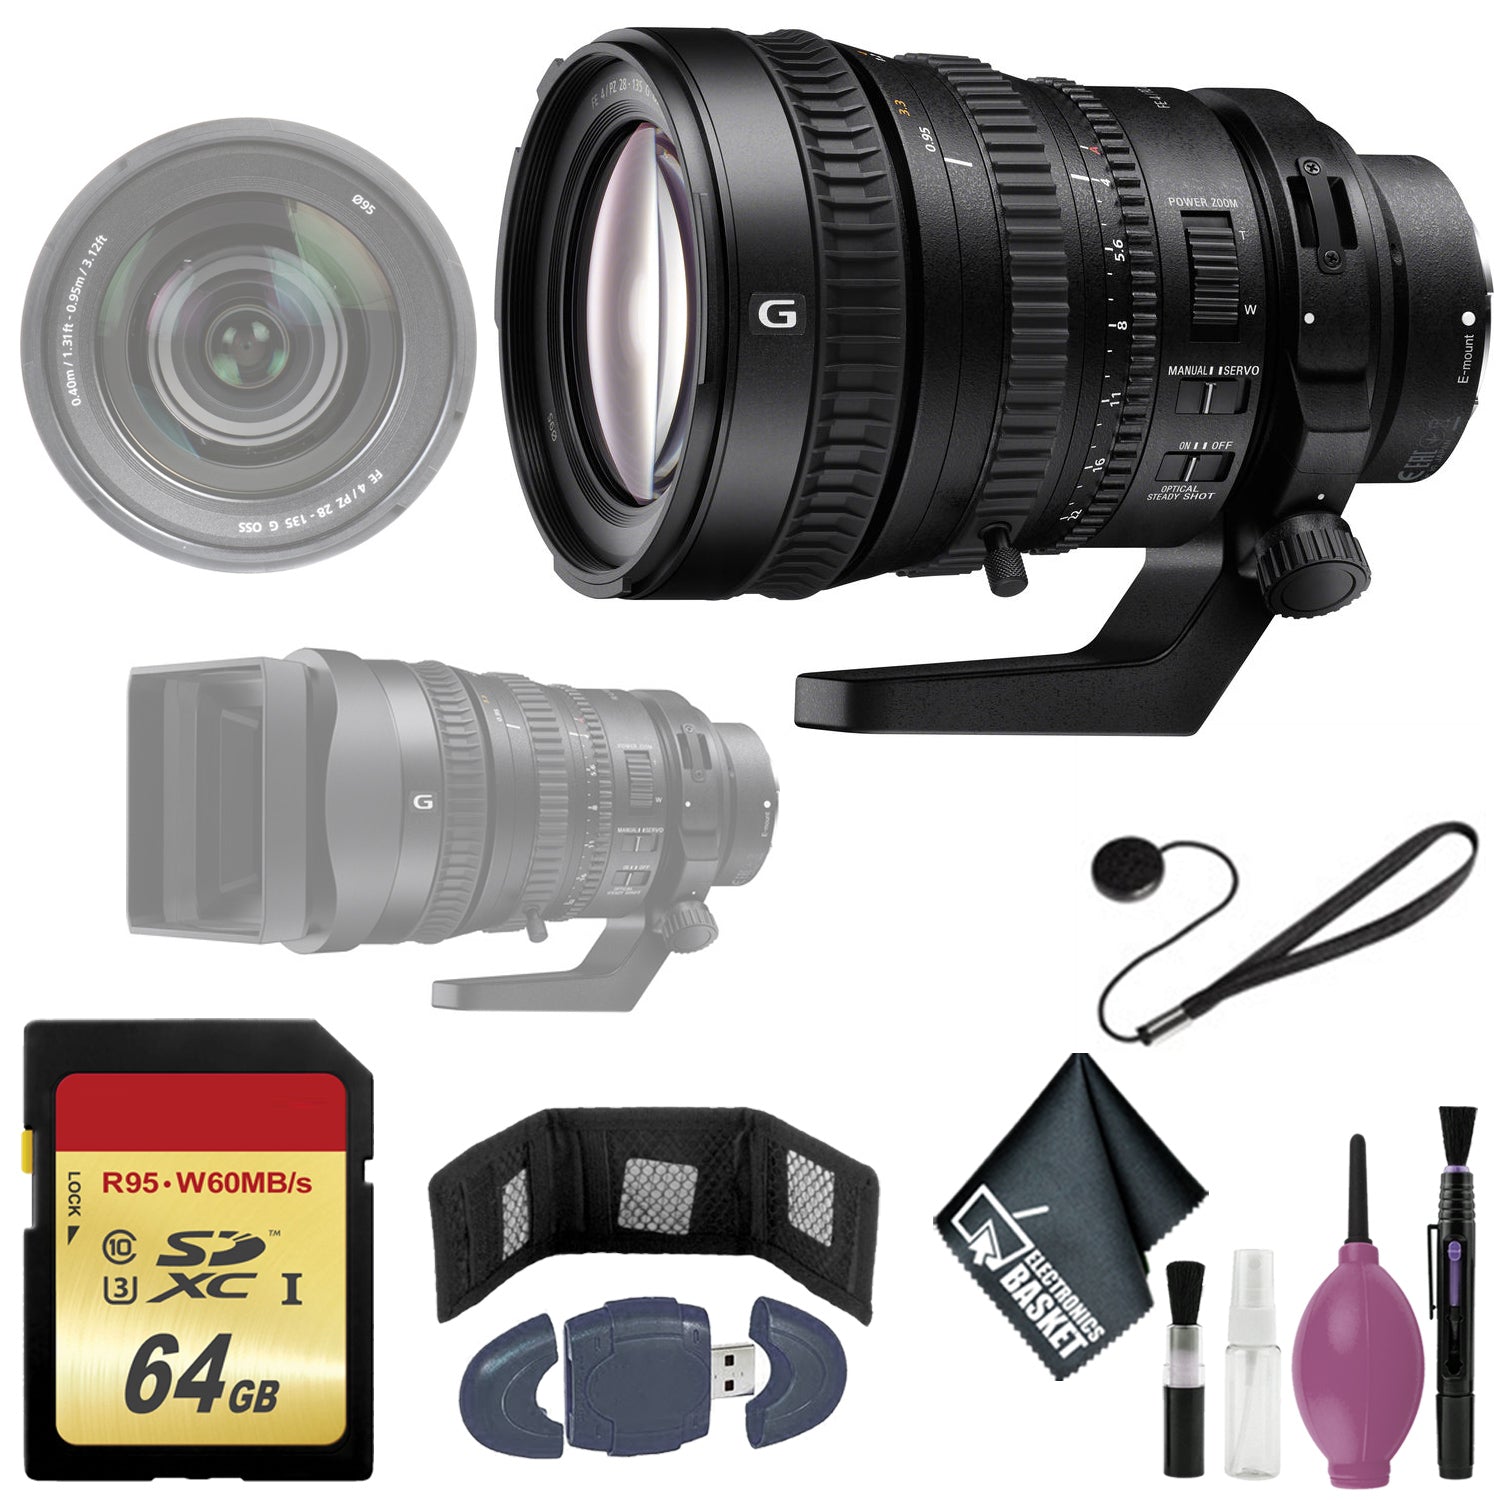 Sony FE PZ 28-135mm f/4 G OSS Lens - Cleaning kit - Lens Cap Keeper - 64GB Card - Memory Card Reader & Wallet